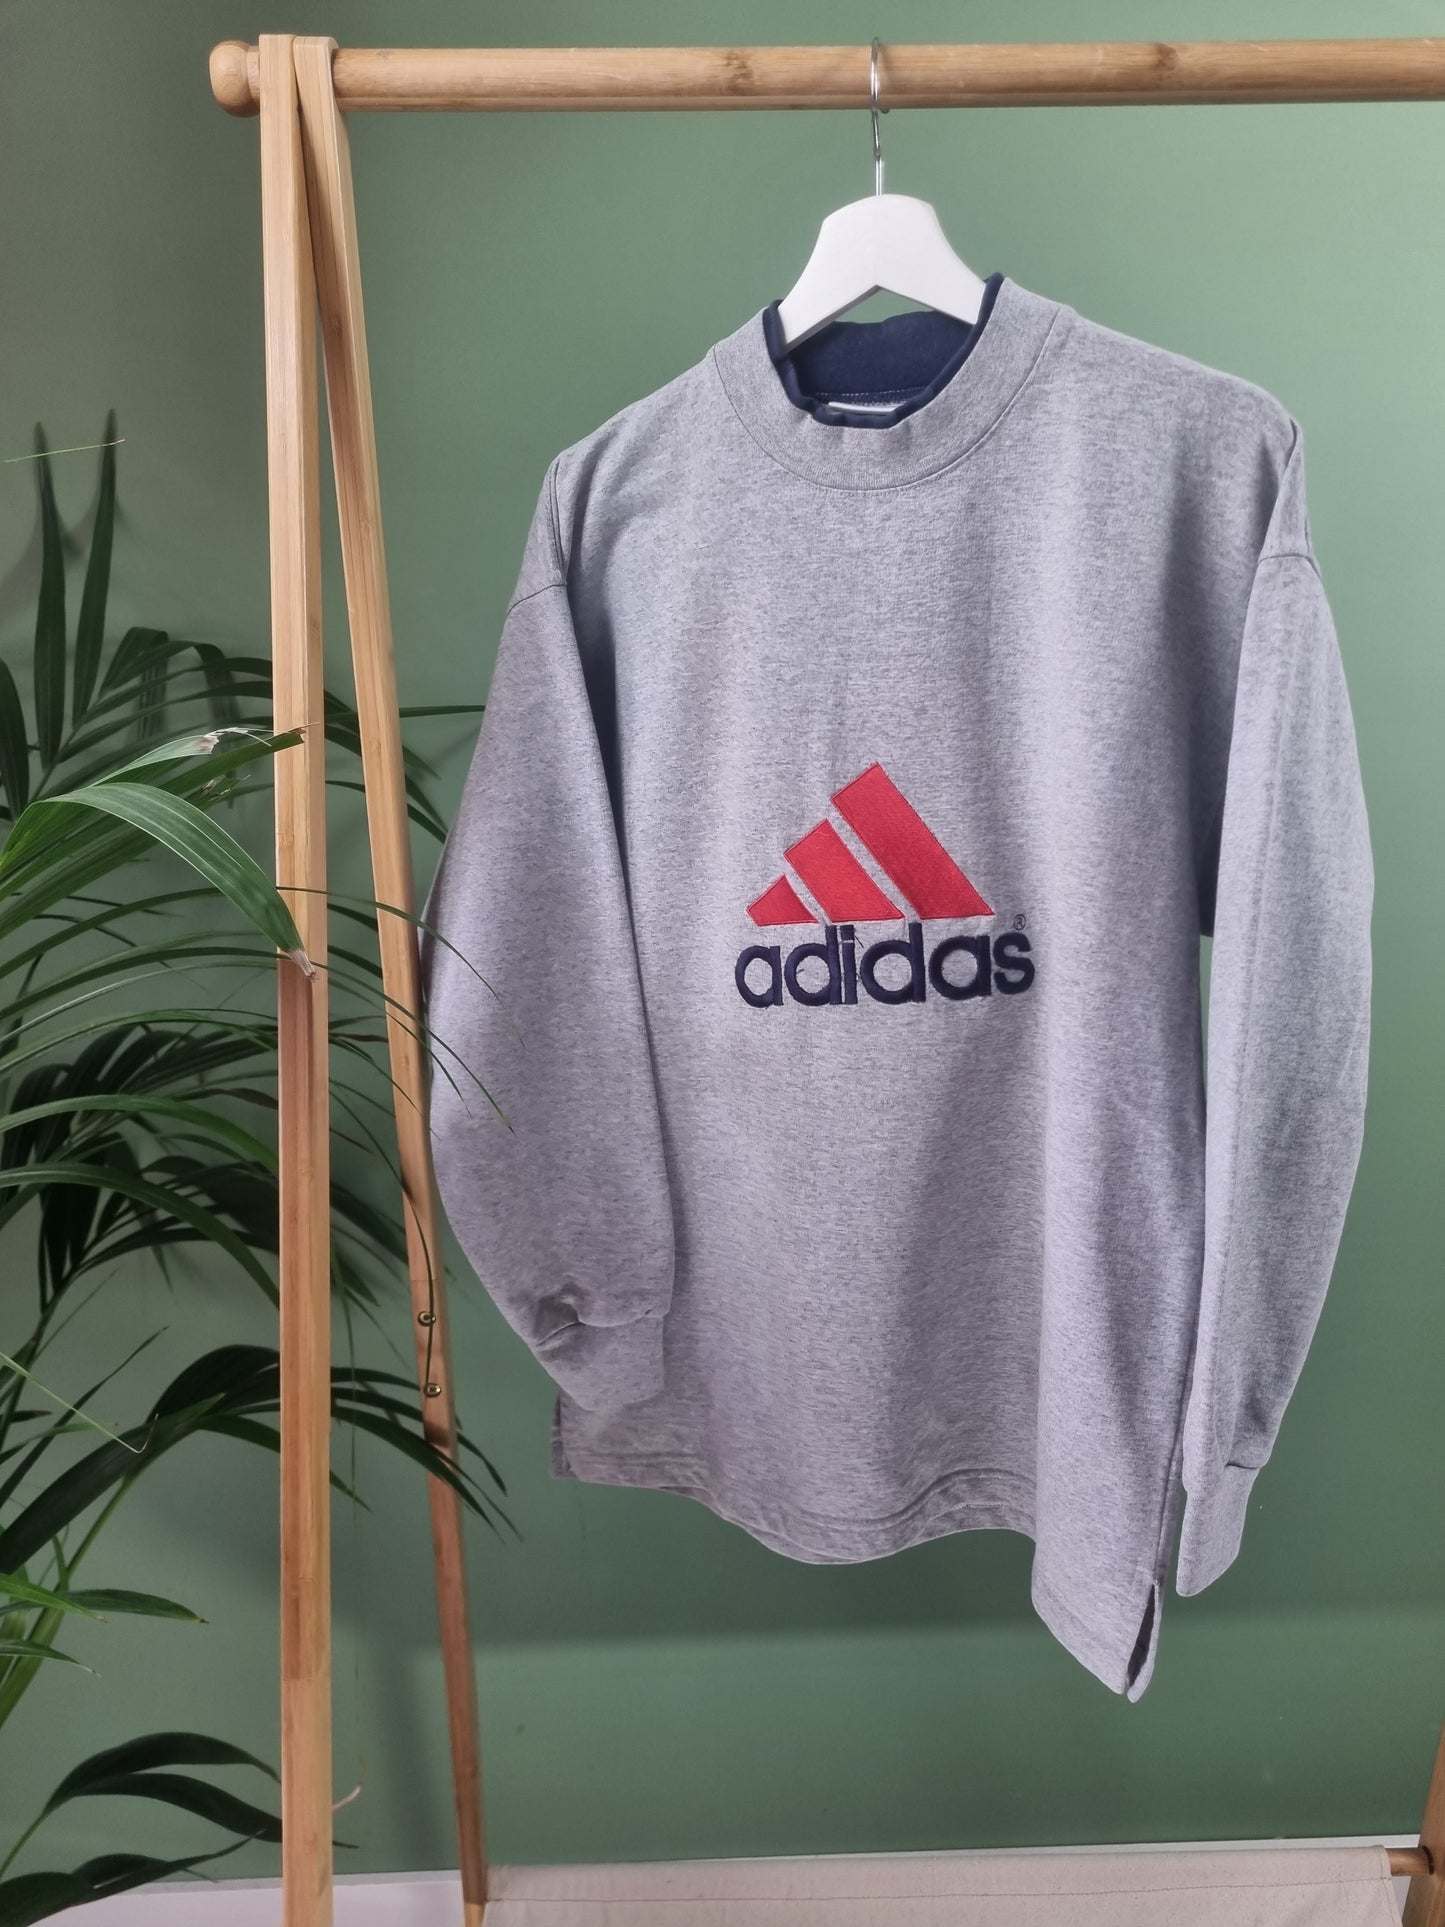 Adidas 80s front logo sweater maat L